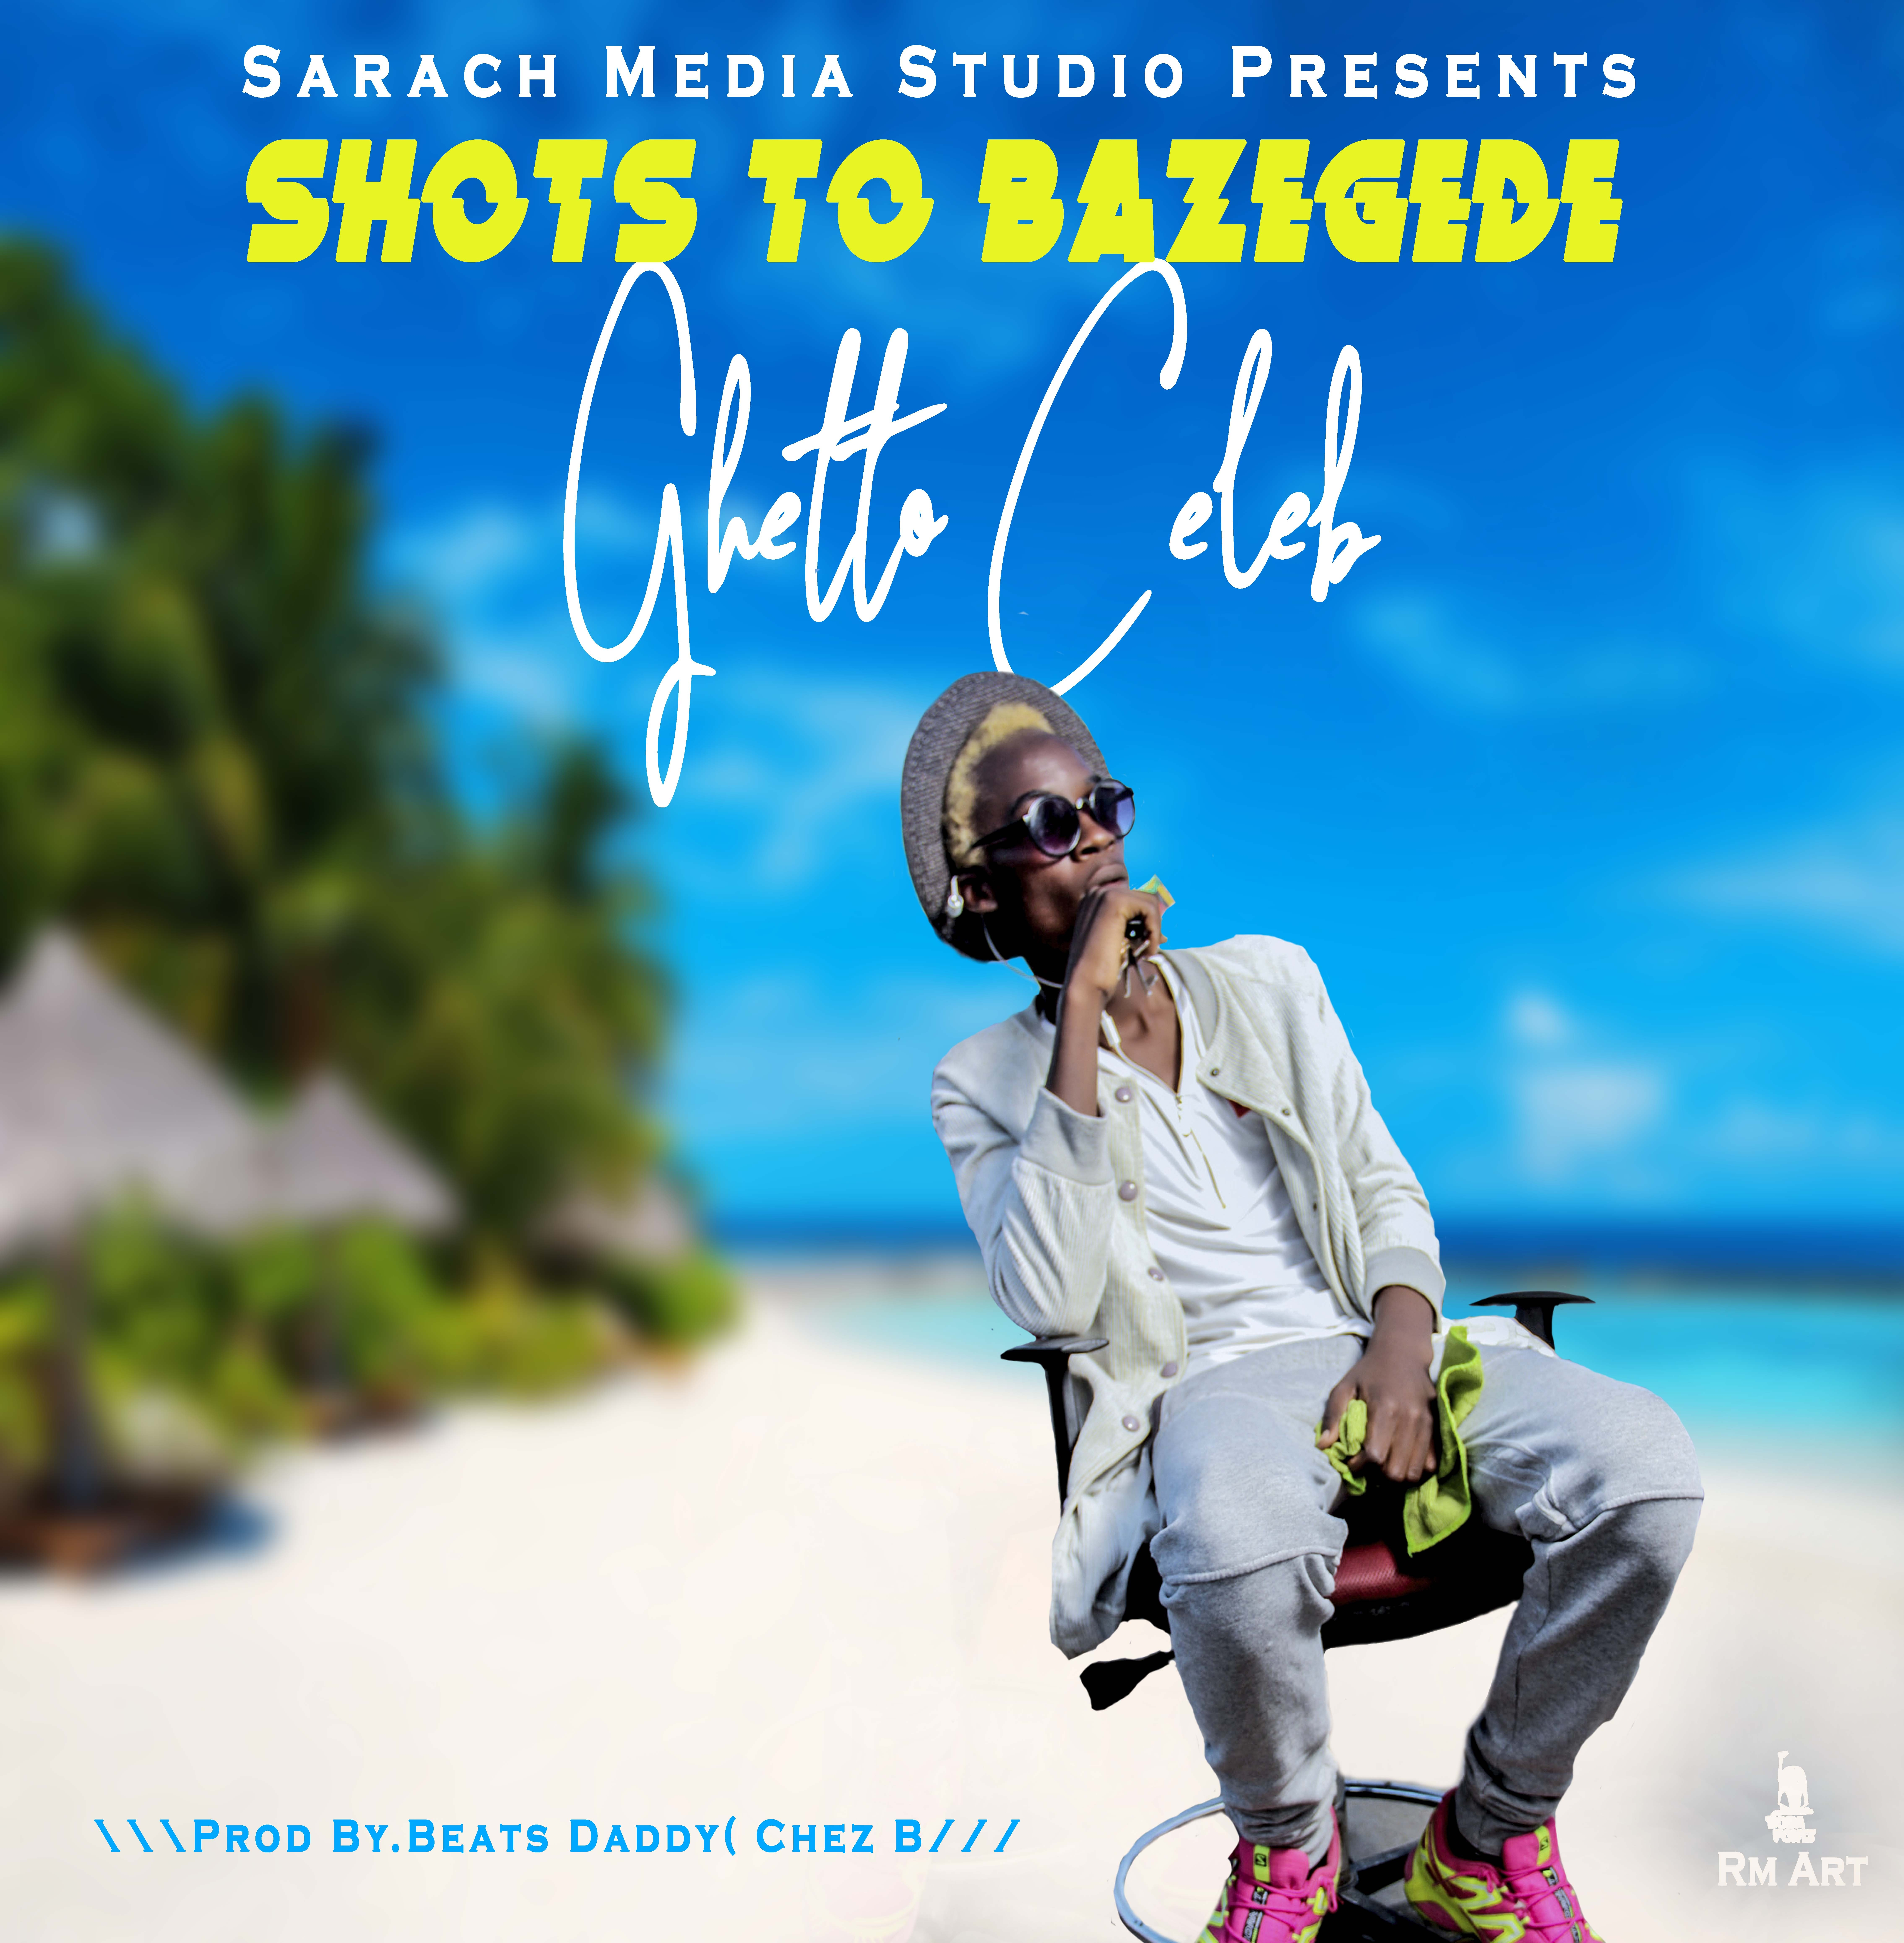 Ghetto Celeb- “Shots To Bazegede” (Prod. Beats Daddy- Chez B)